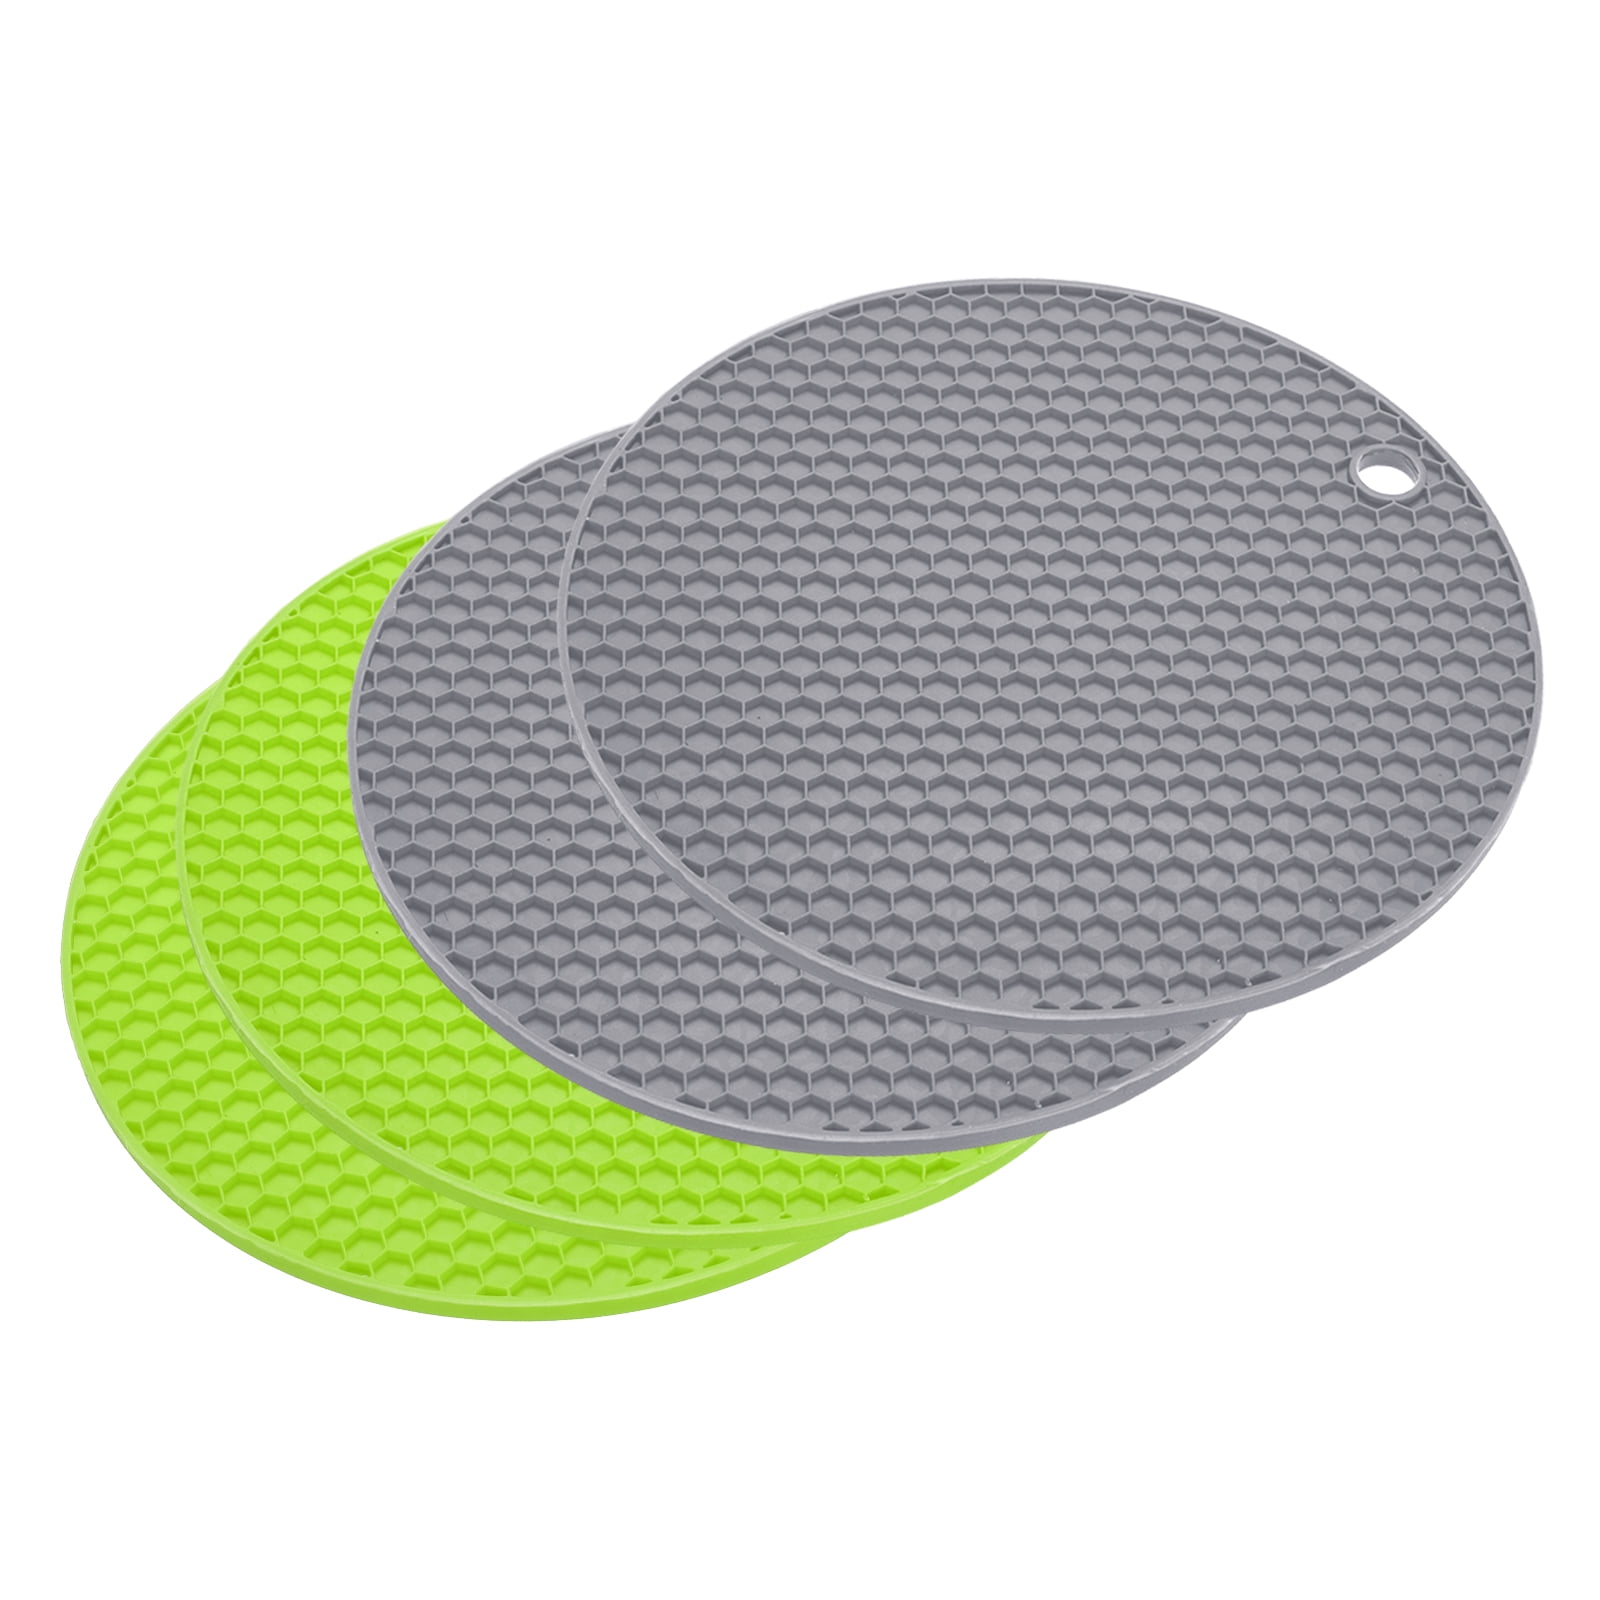 4pcs Silicone Trivet Mat Heat Resistant Pot Holder Hot Pads-Dark Grey+Green